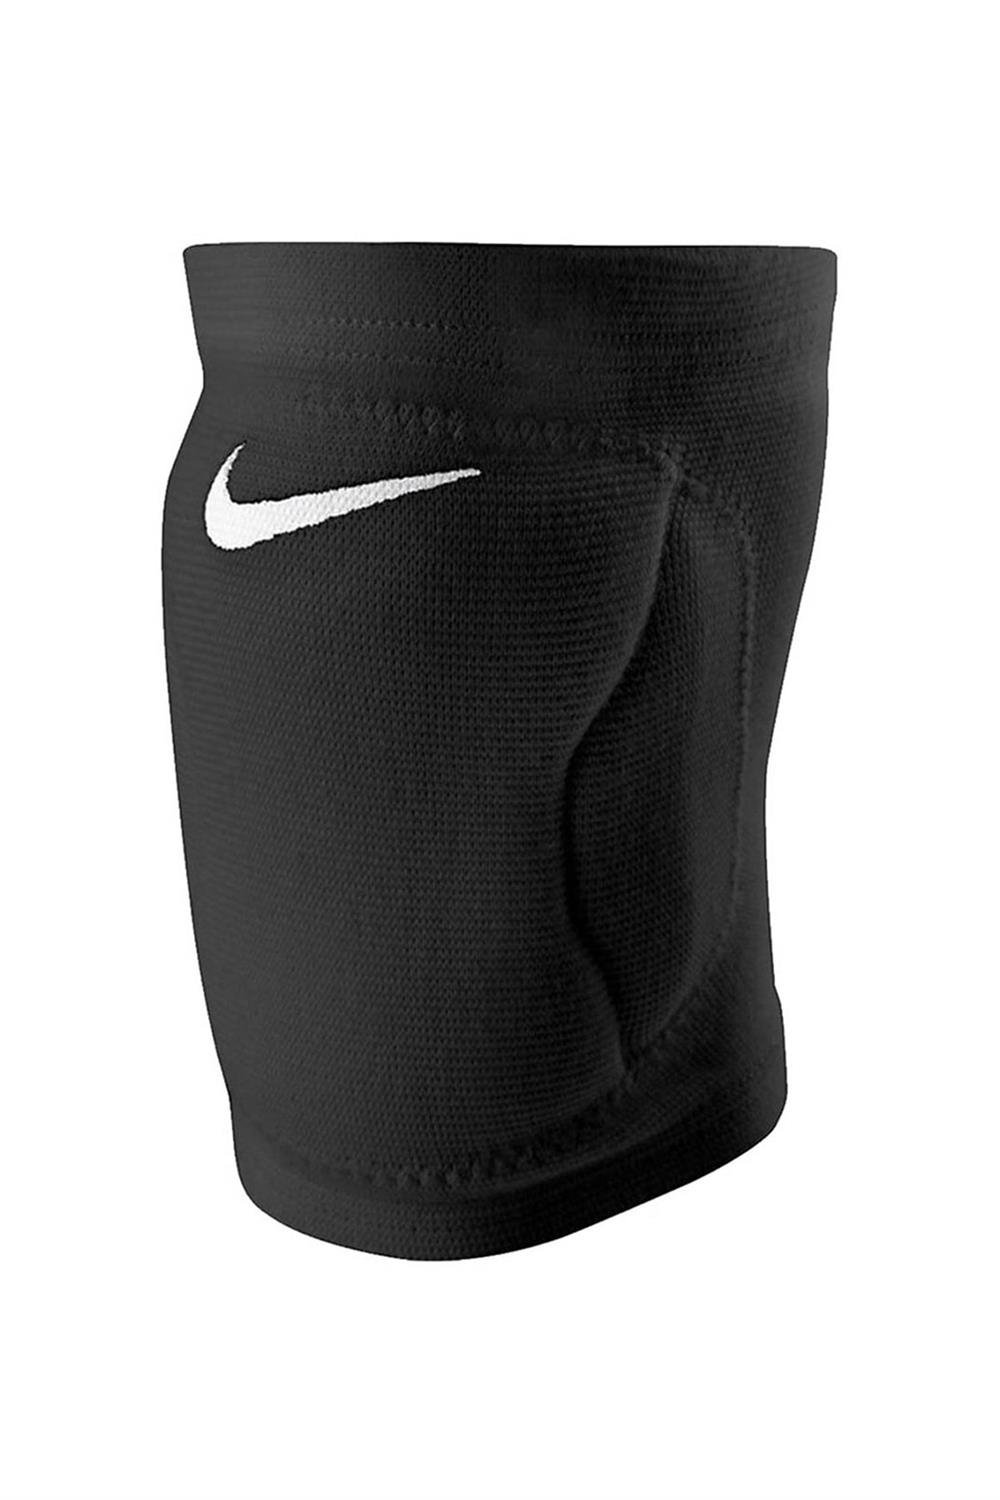 Nike Streak Volleyball Knee Pads 2 Pk Çocuk Voleybol Dizliği N.Vp.13.001.Os  | Sporborsasi.com